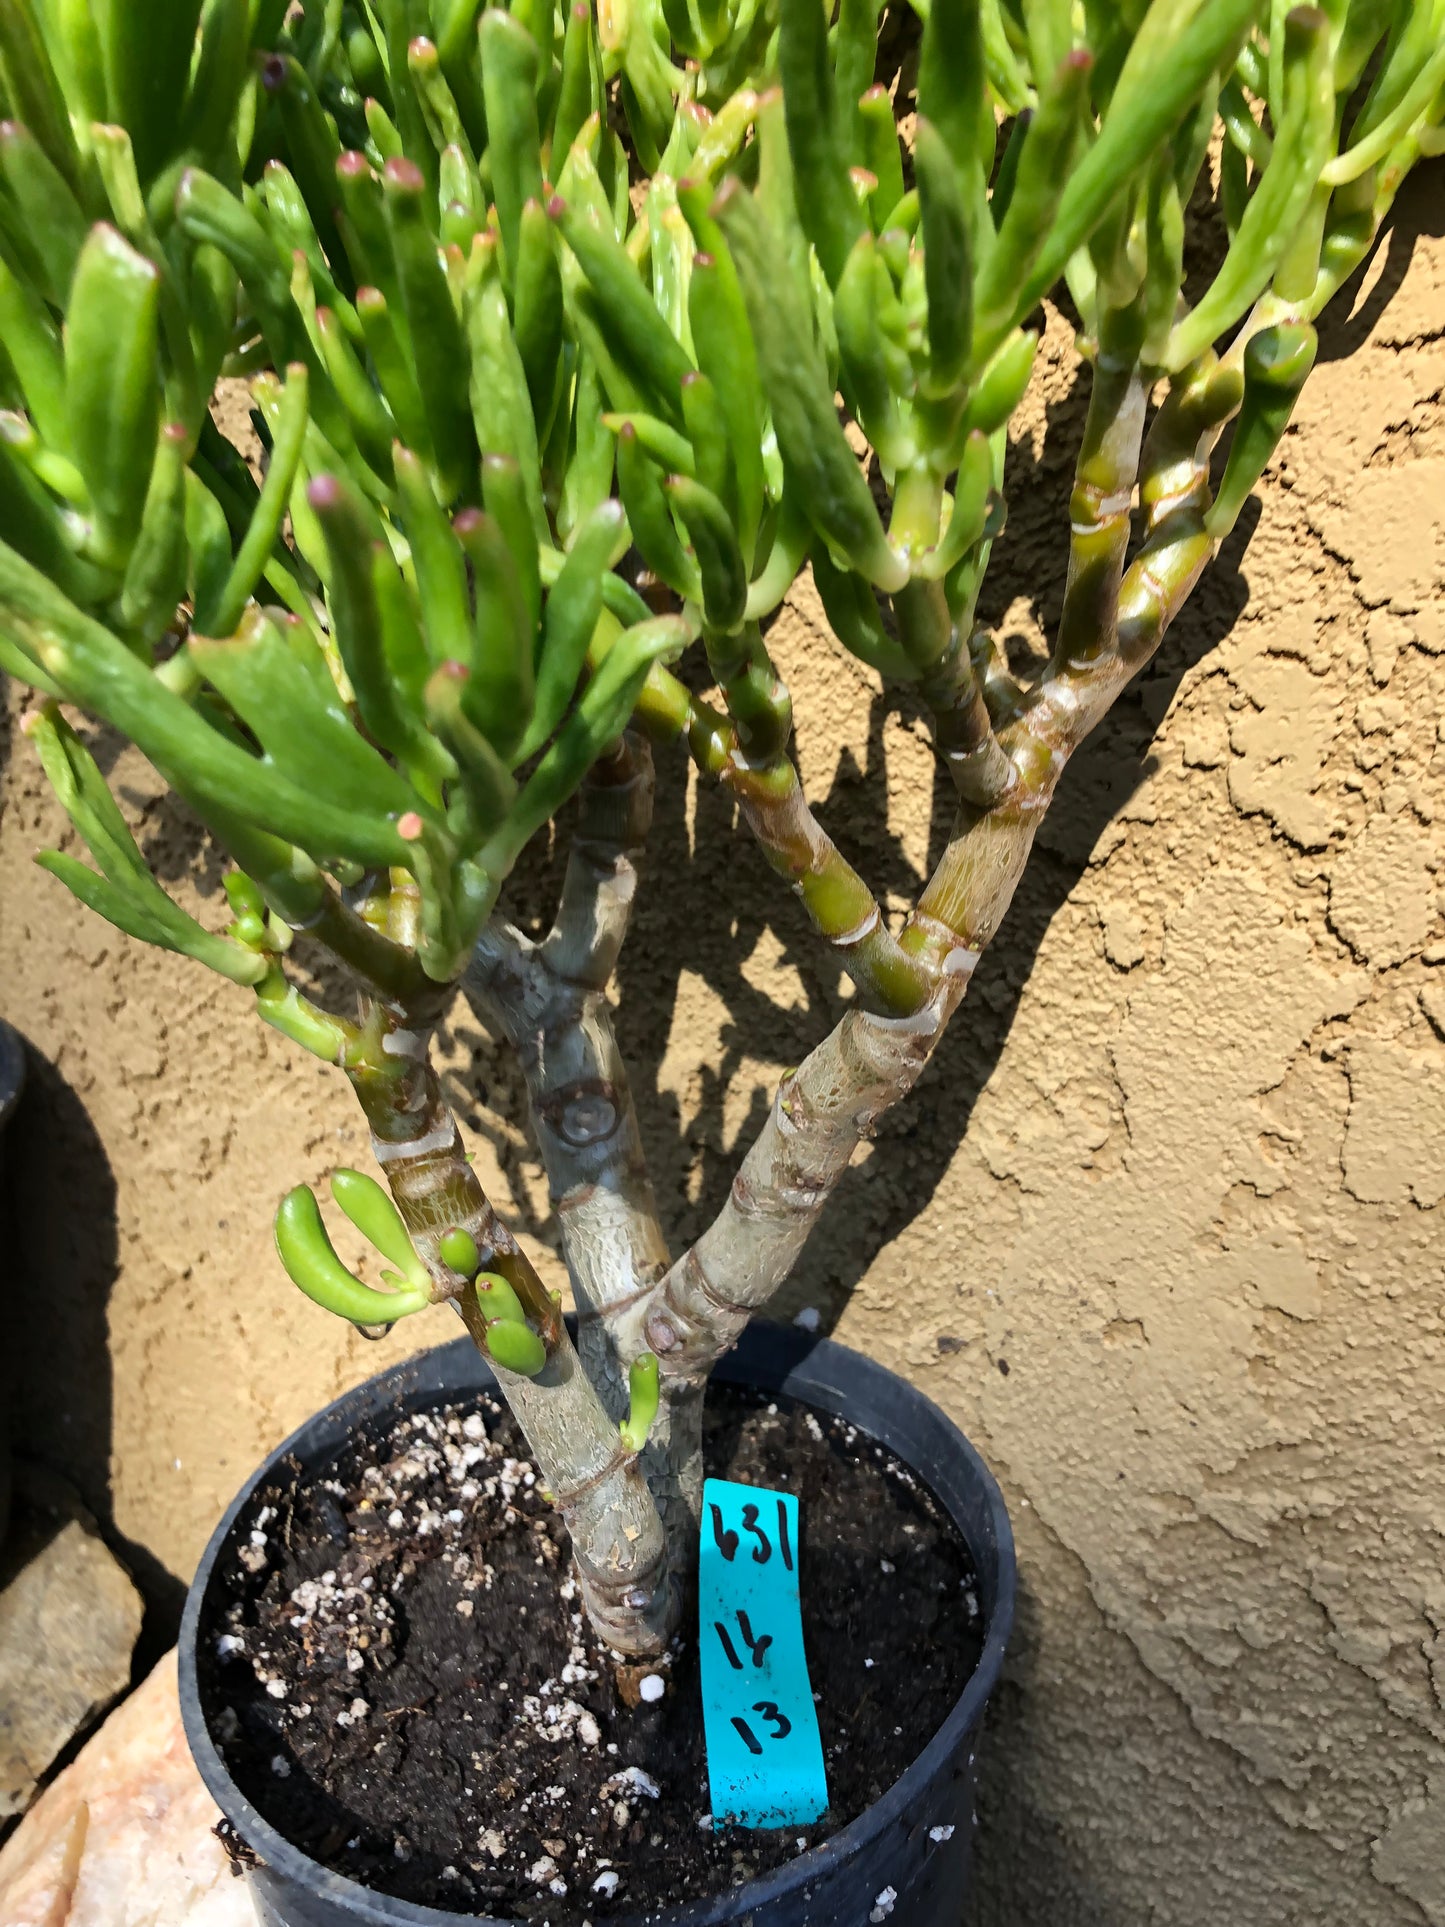 Crassula Gollum Jade Succulent Bonsai Style Living Plant 16”Tall #631G